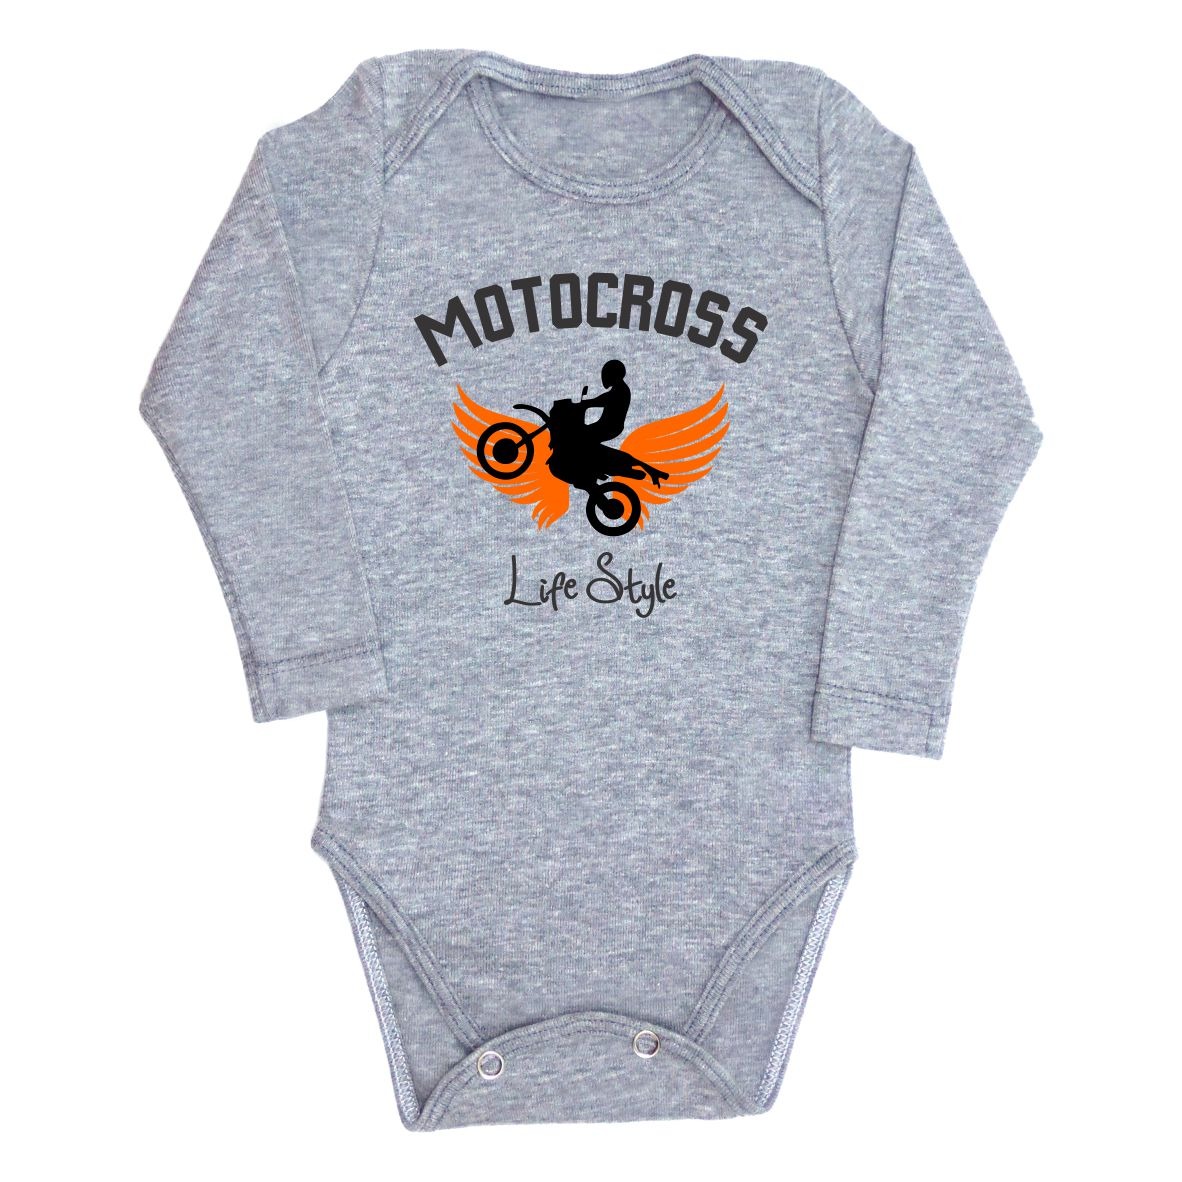 MOTOCROSS Life Style - Atelier Bebê Bolê